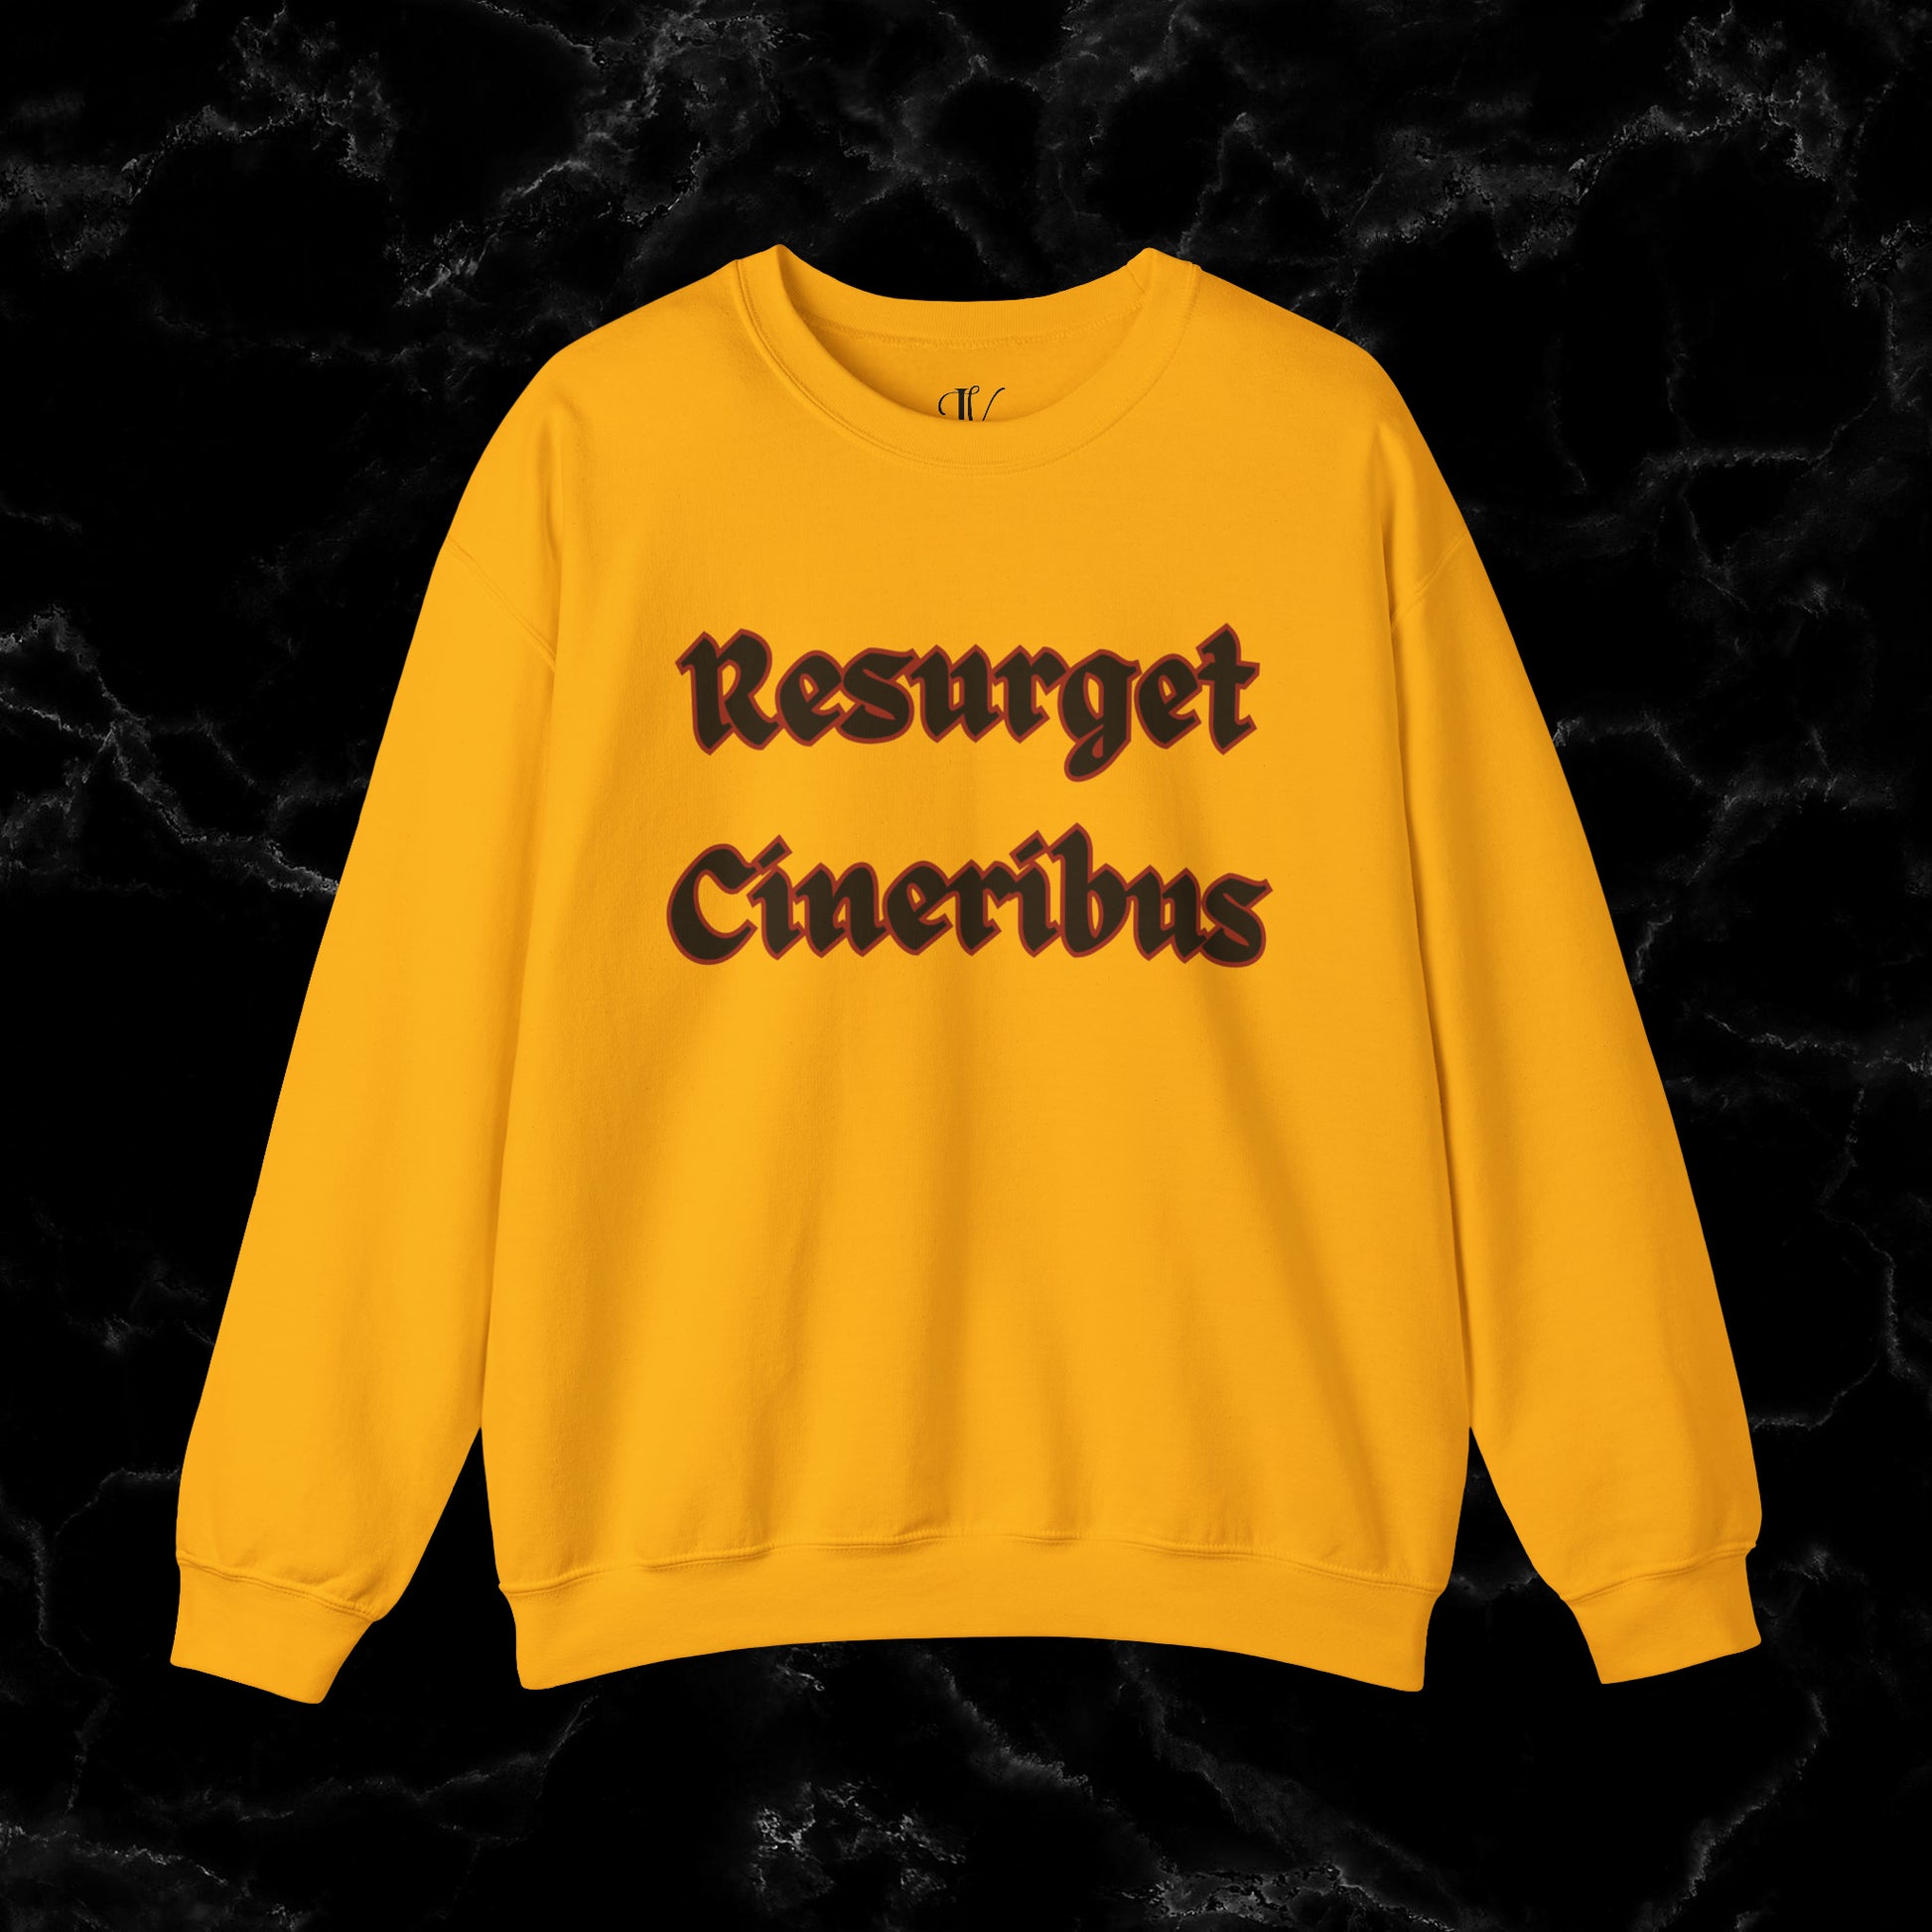 Resurget Cineribus Unisex Crewneck Sweatshirt - Latin Inspirational Gifts for Sports Football Fans Sweatshirt S Gold 